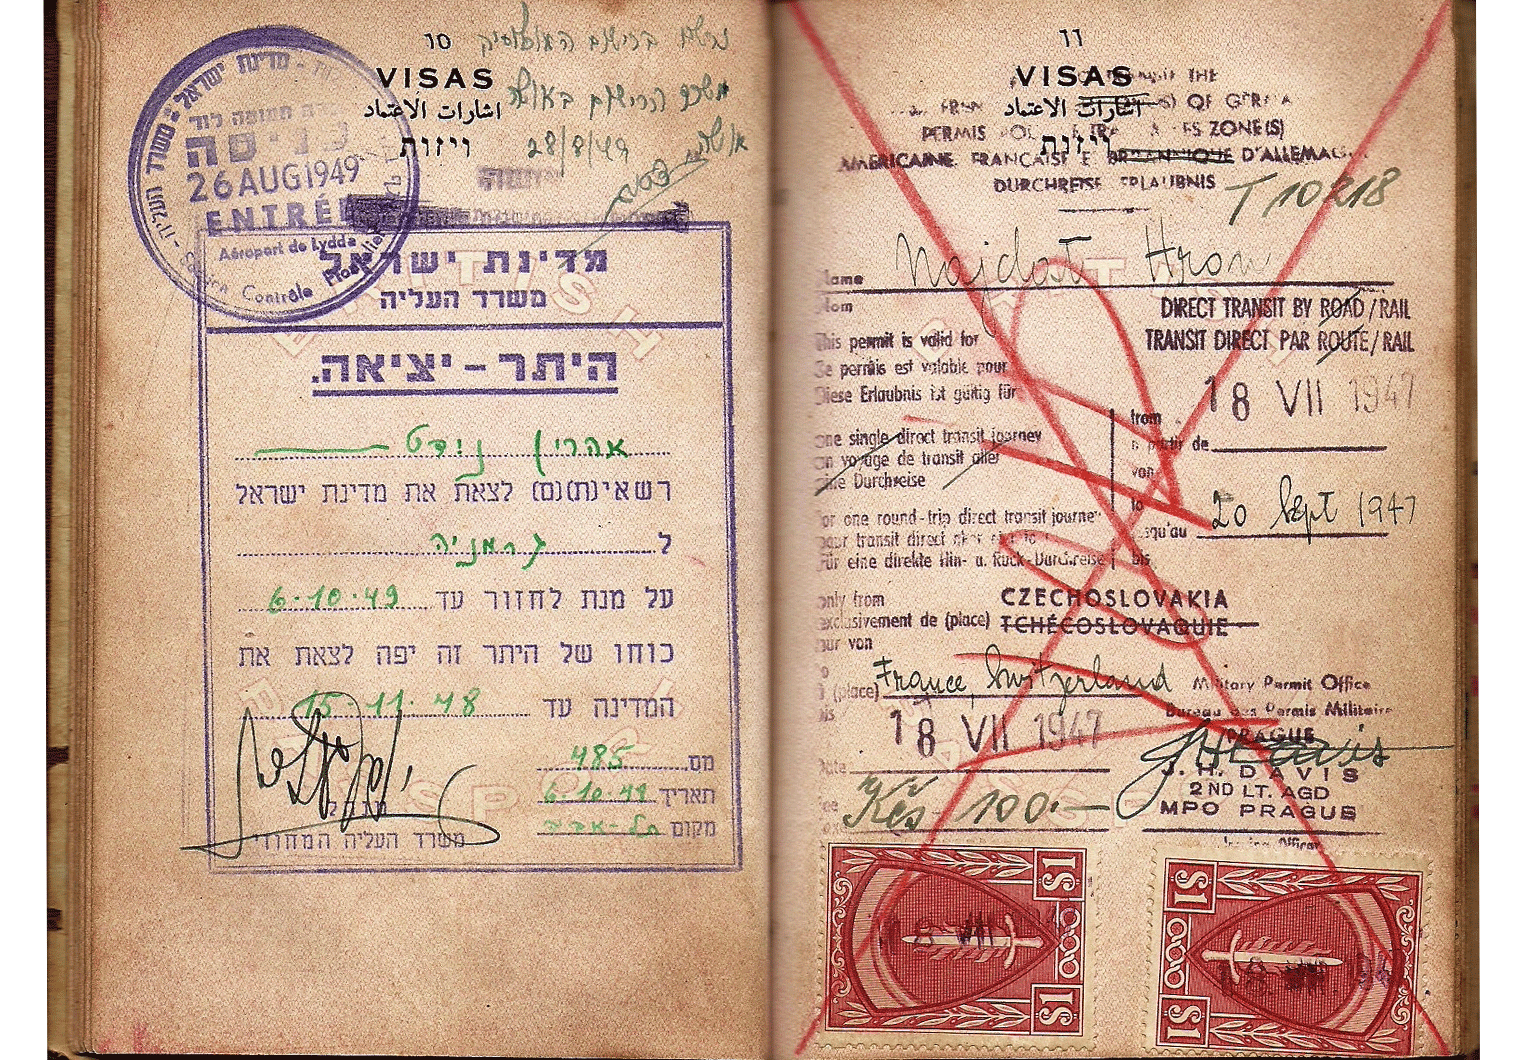 1948 early Israeli visa inside a passport